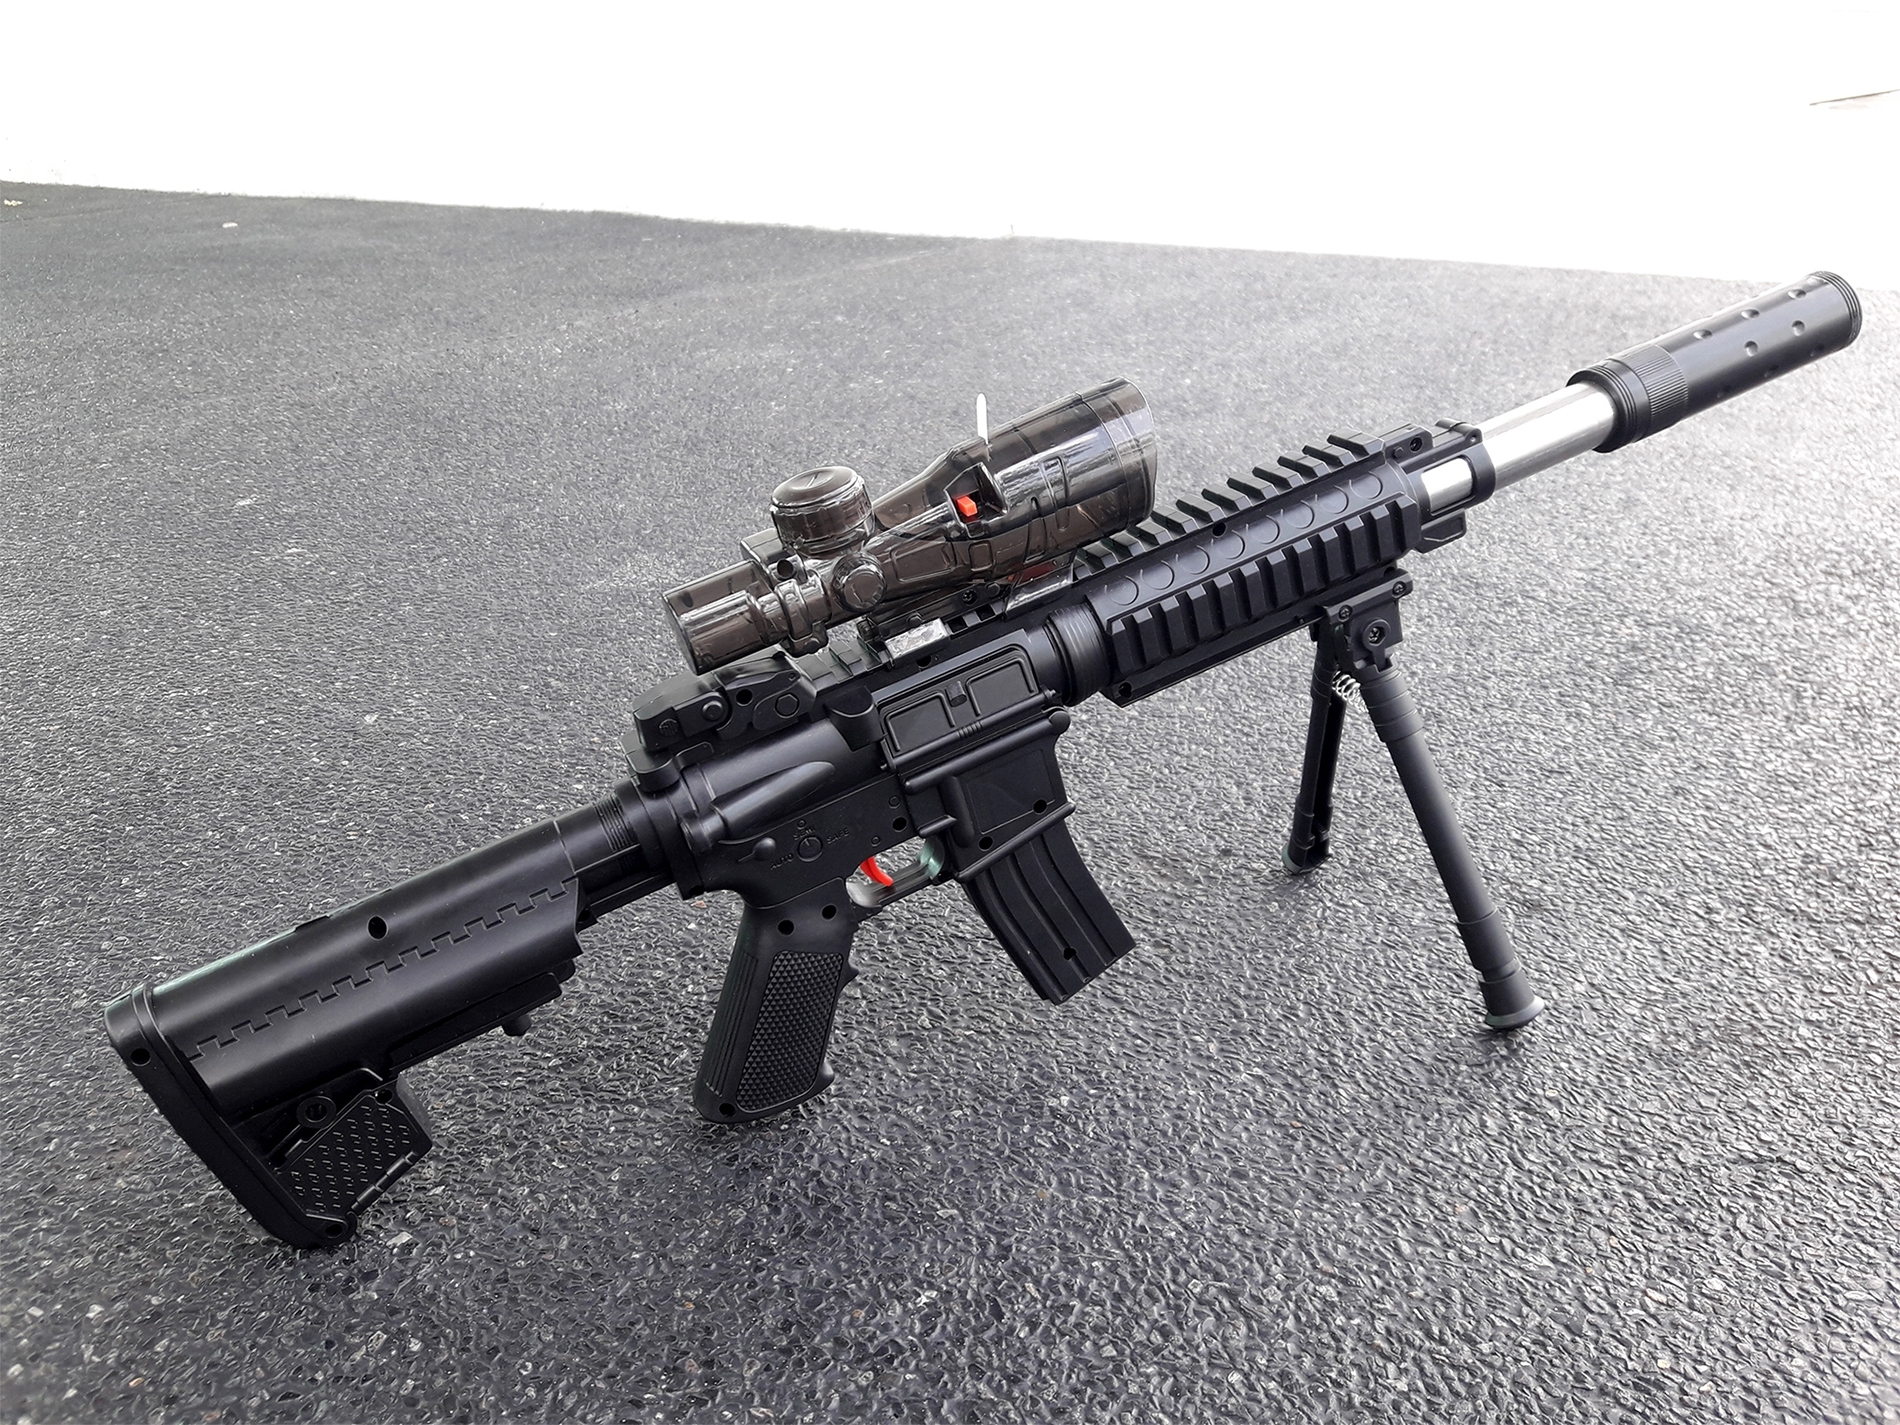 KhoaOat Shop ปืนของเล่น ปืนอัดลมยิงกระสุนเจล ปืนกระสุนน้ำ กระสุนเจล สีดำ ชักยิงง่าย ลำกล้องติดเลเซอร์ M5